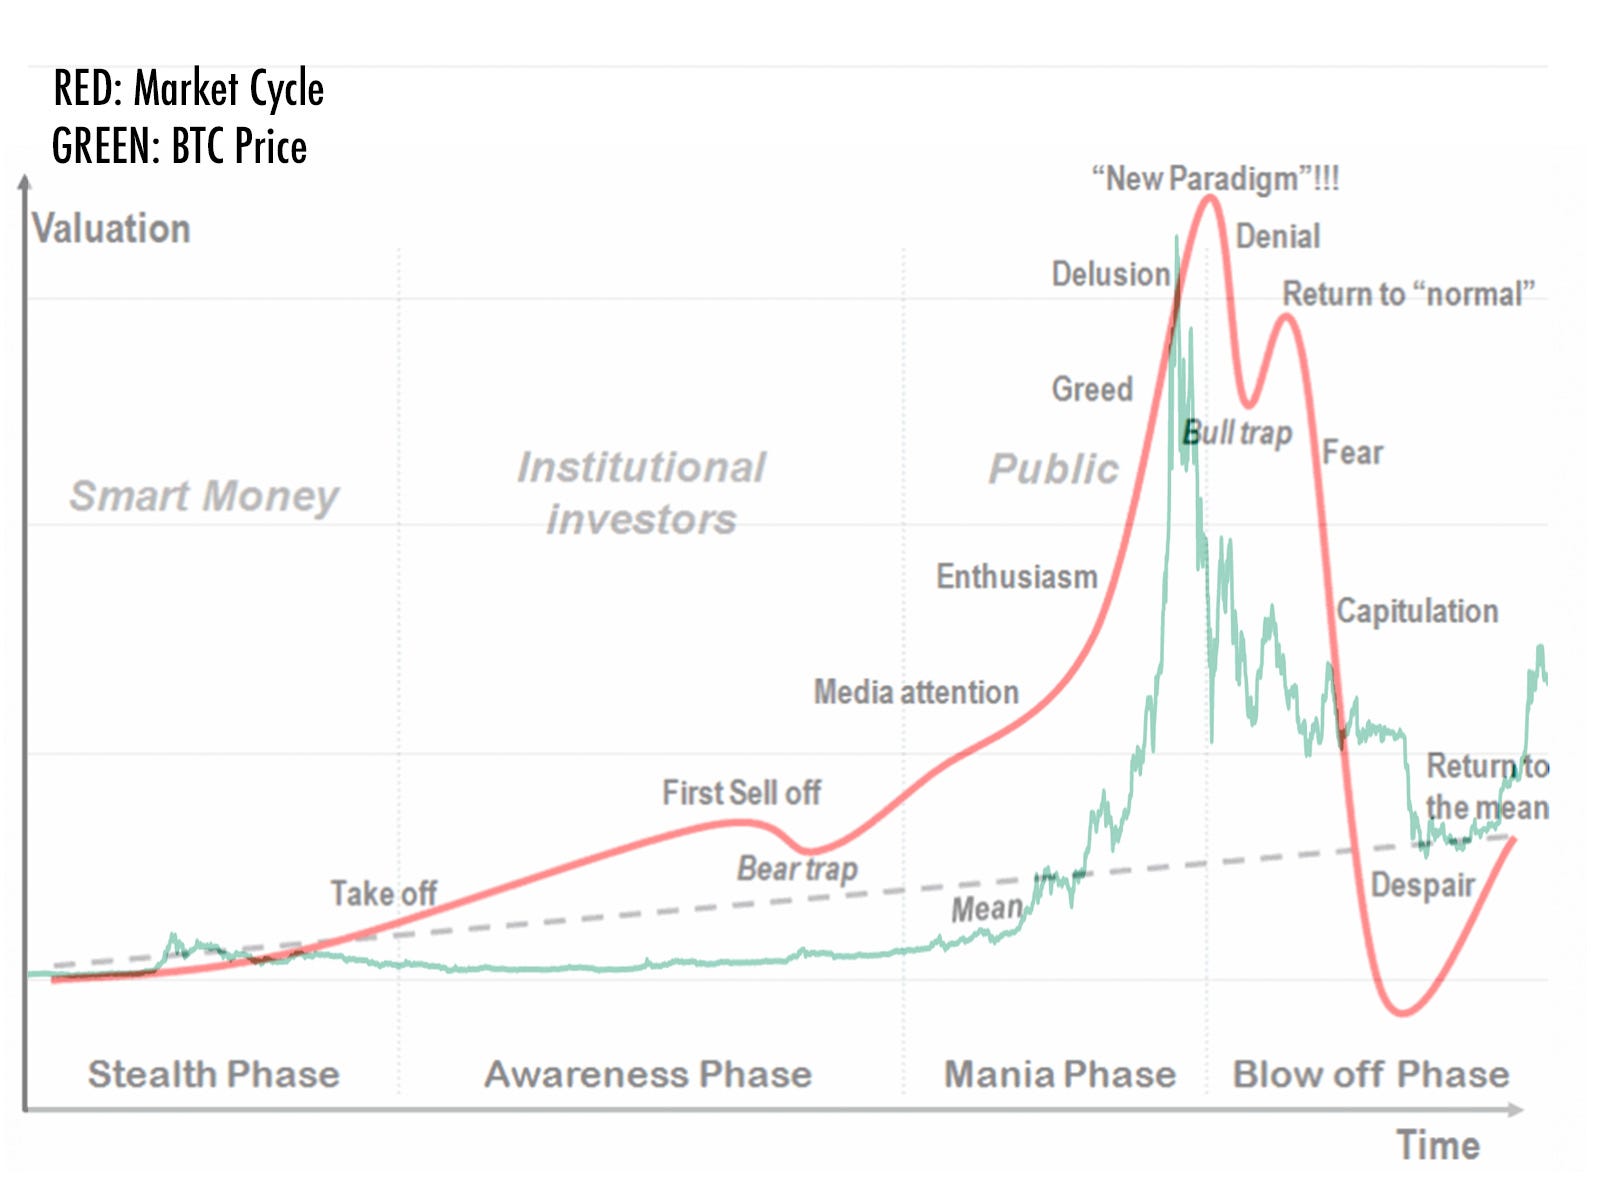 Bitcoin Cycle Chart